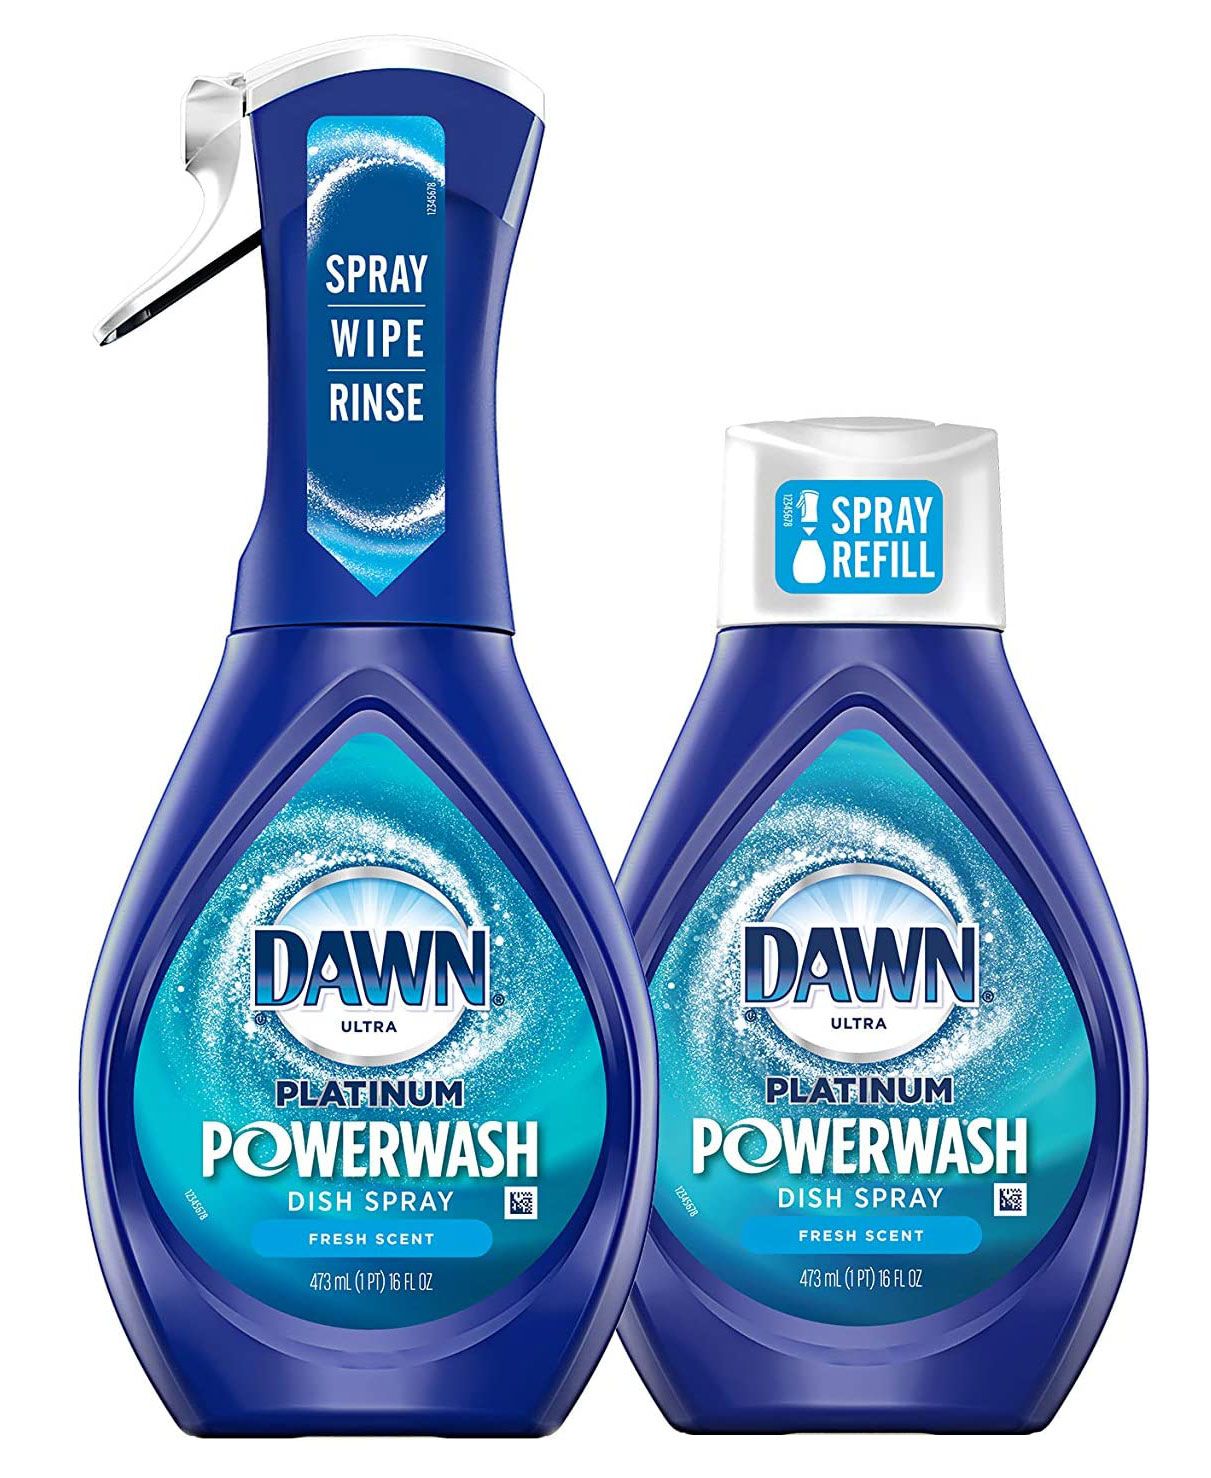 Itens mais inteligentes 2020 - Dawn Platinum Powerwash